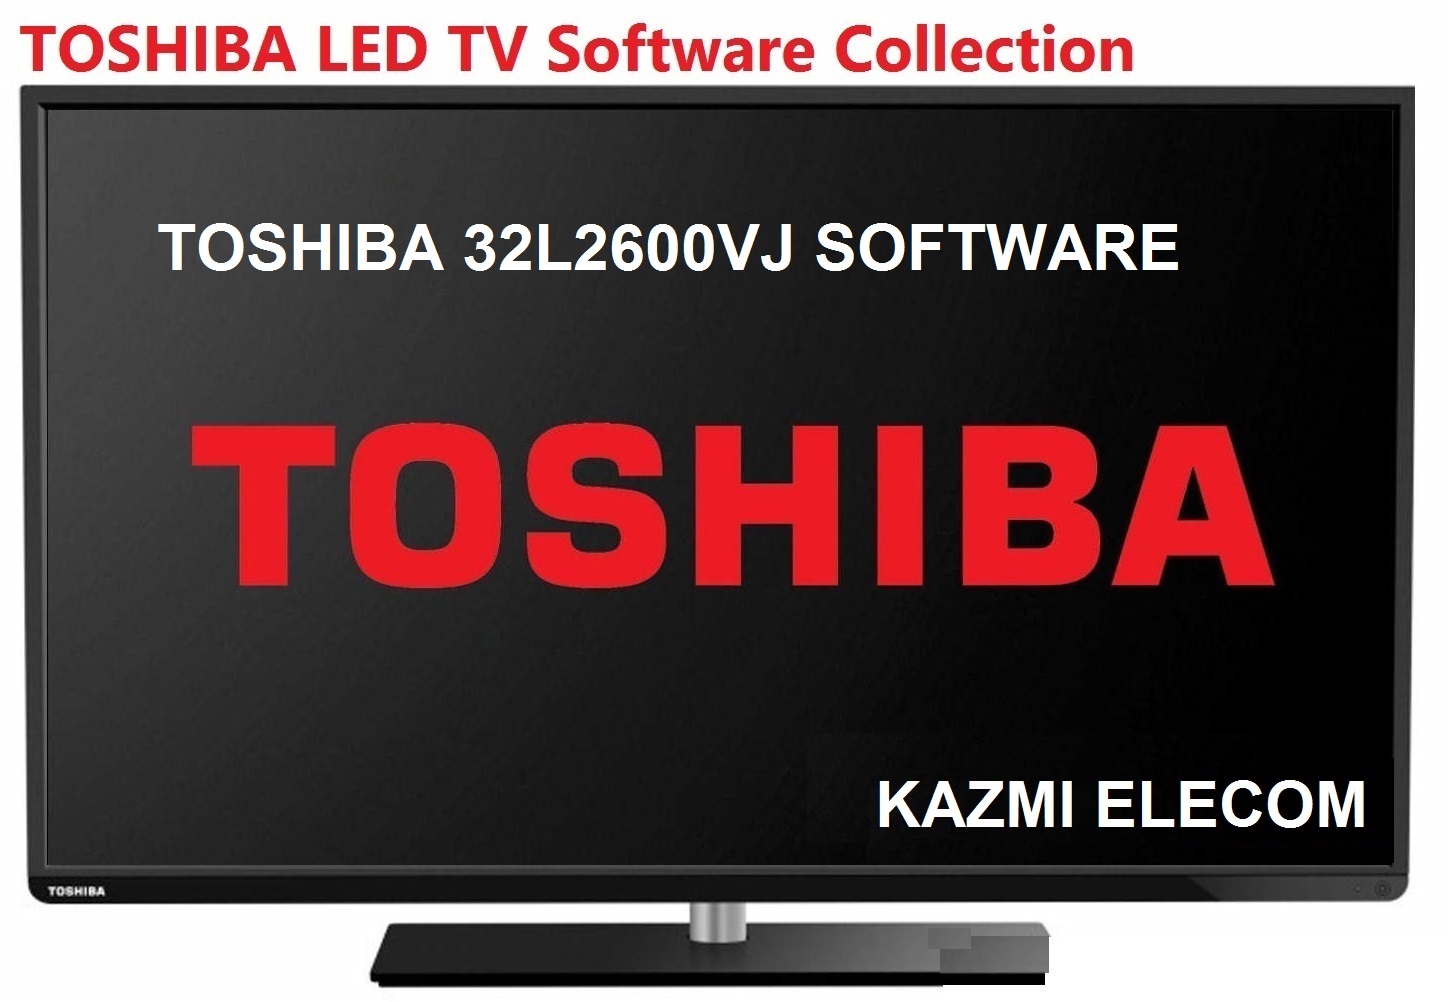 Toshiba 32L2600Vj